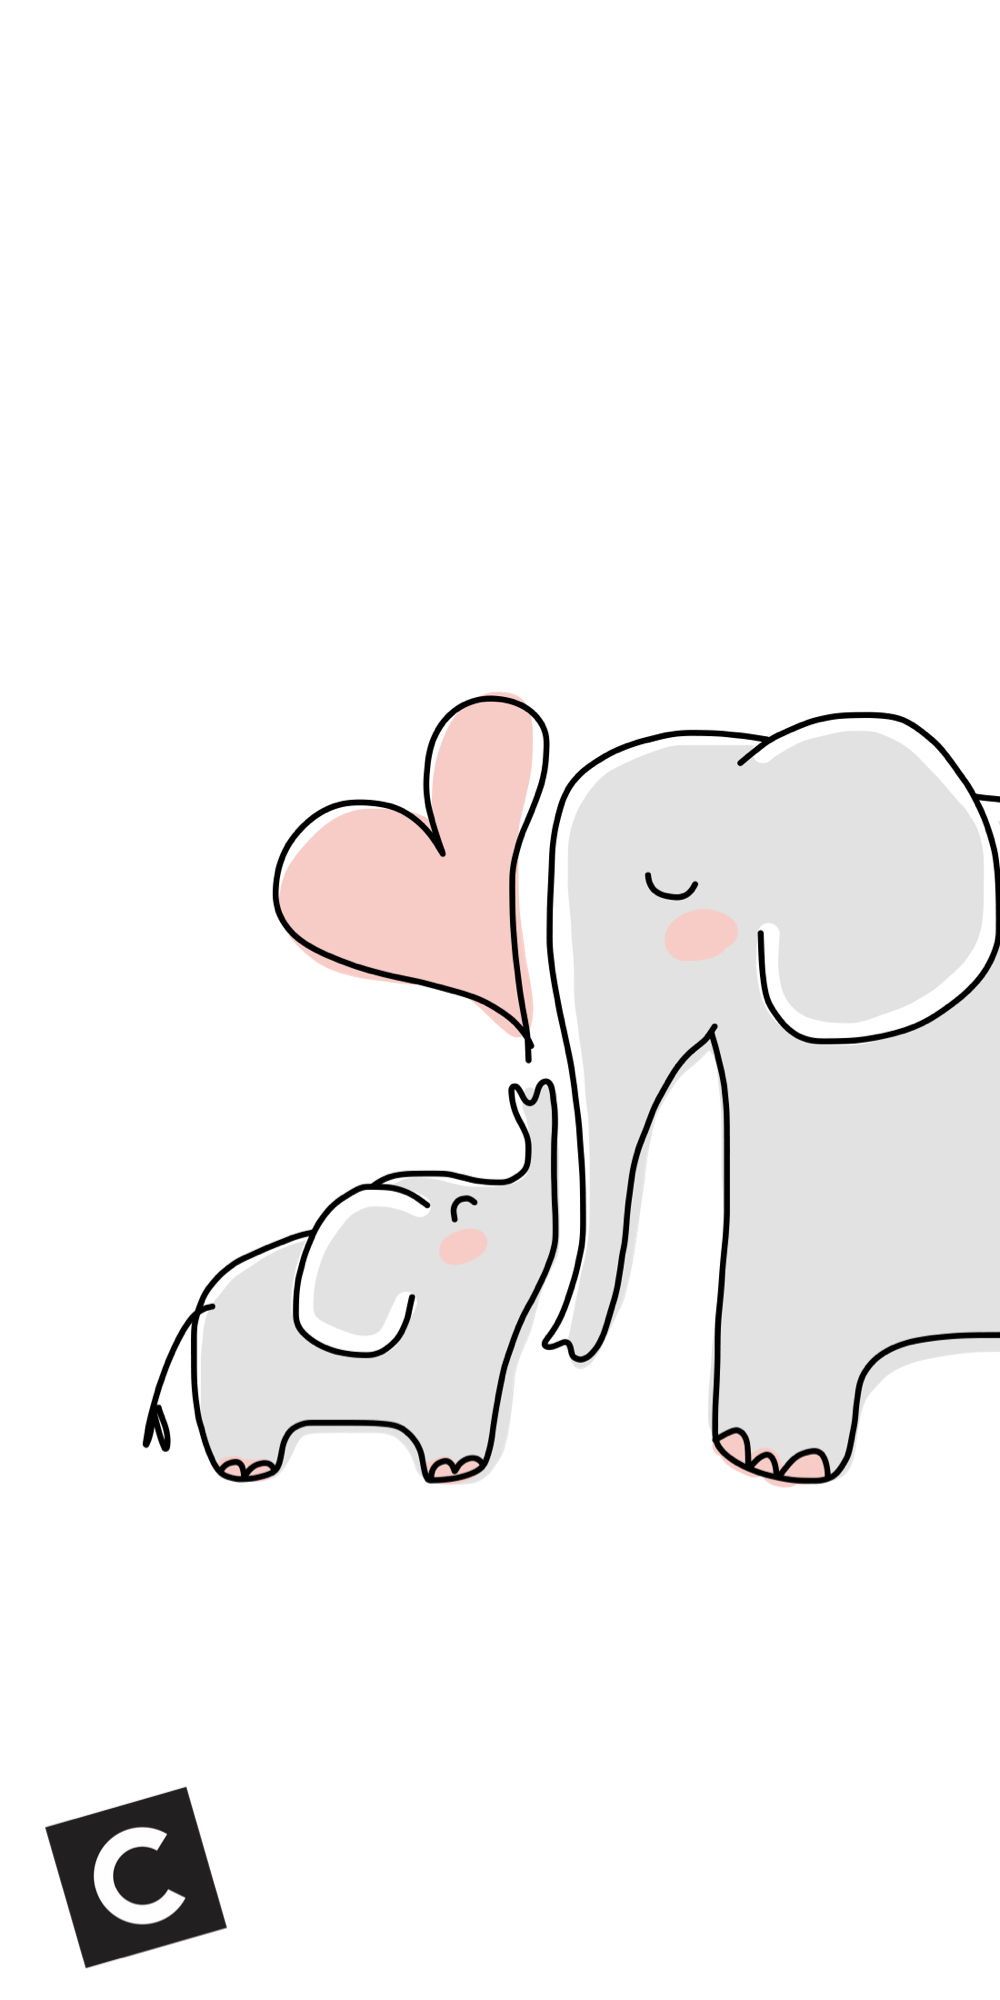 Cute elephant drawing .com